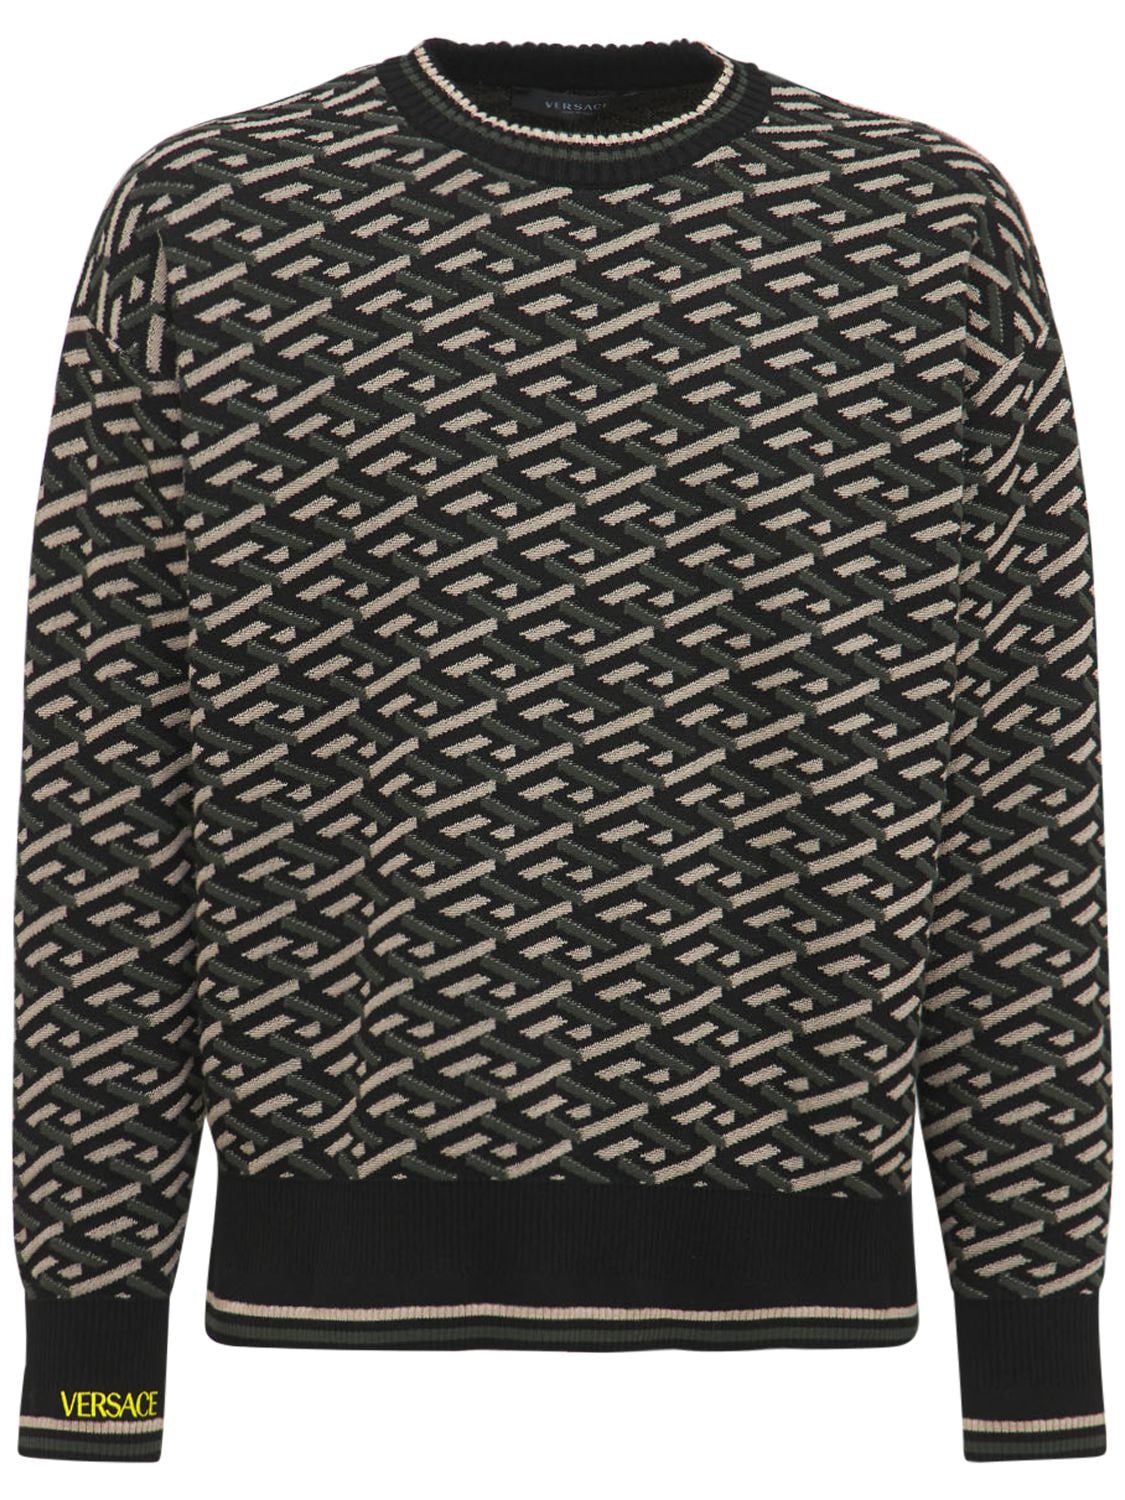 Monogram Jacquard Cotton Knit Sweater